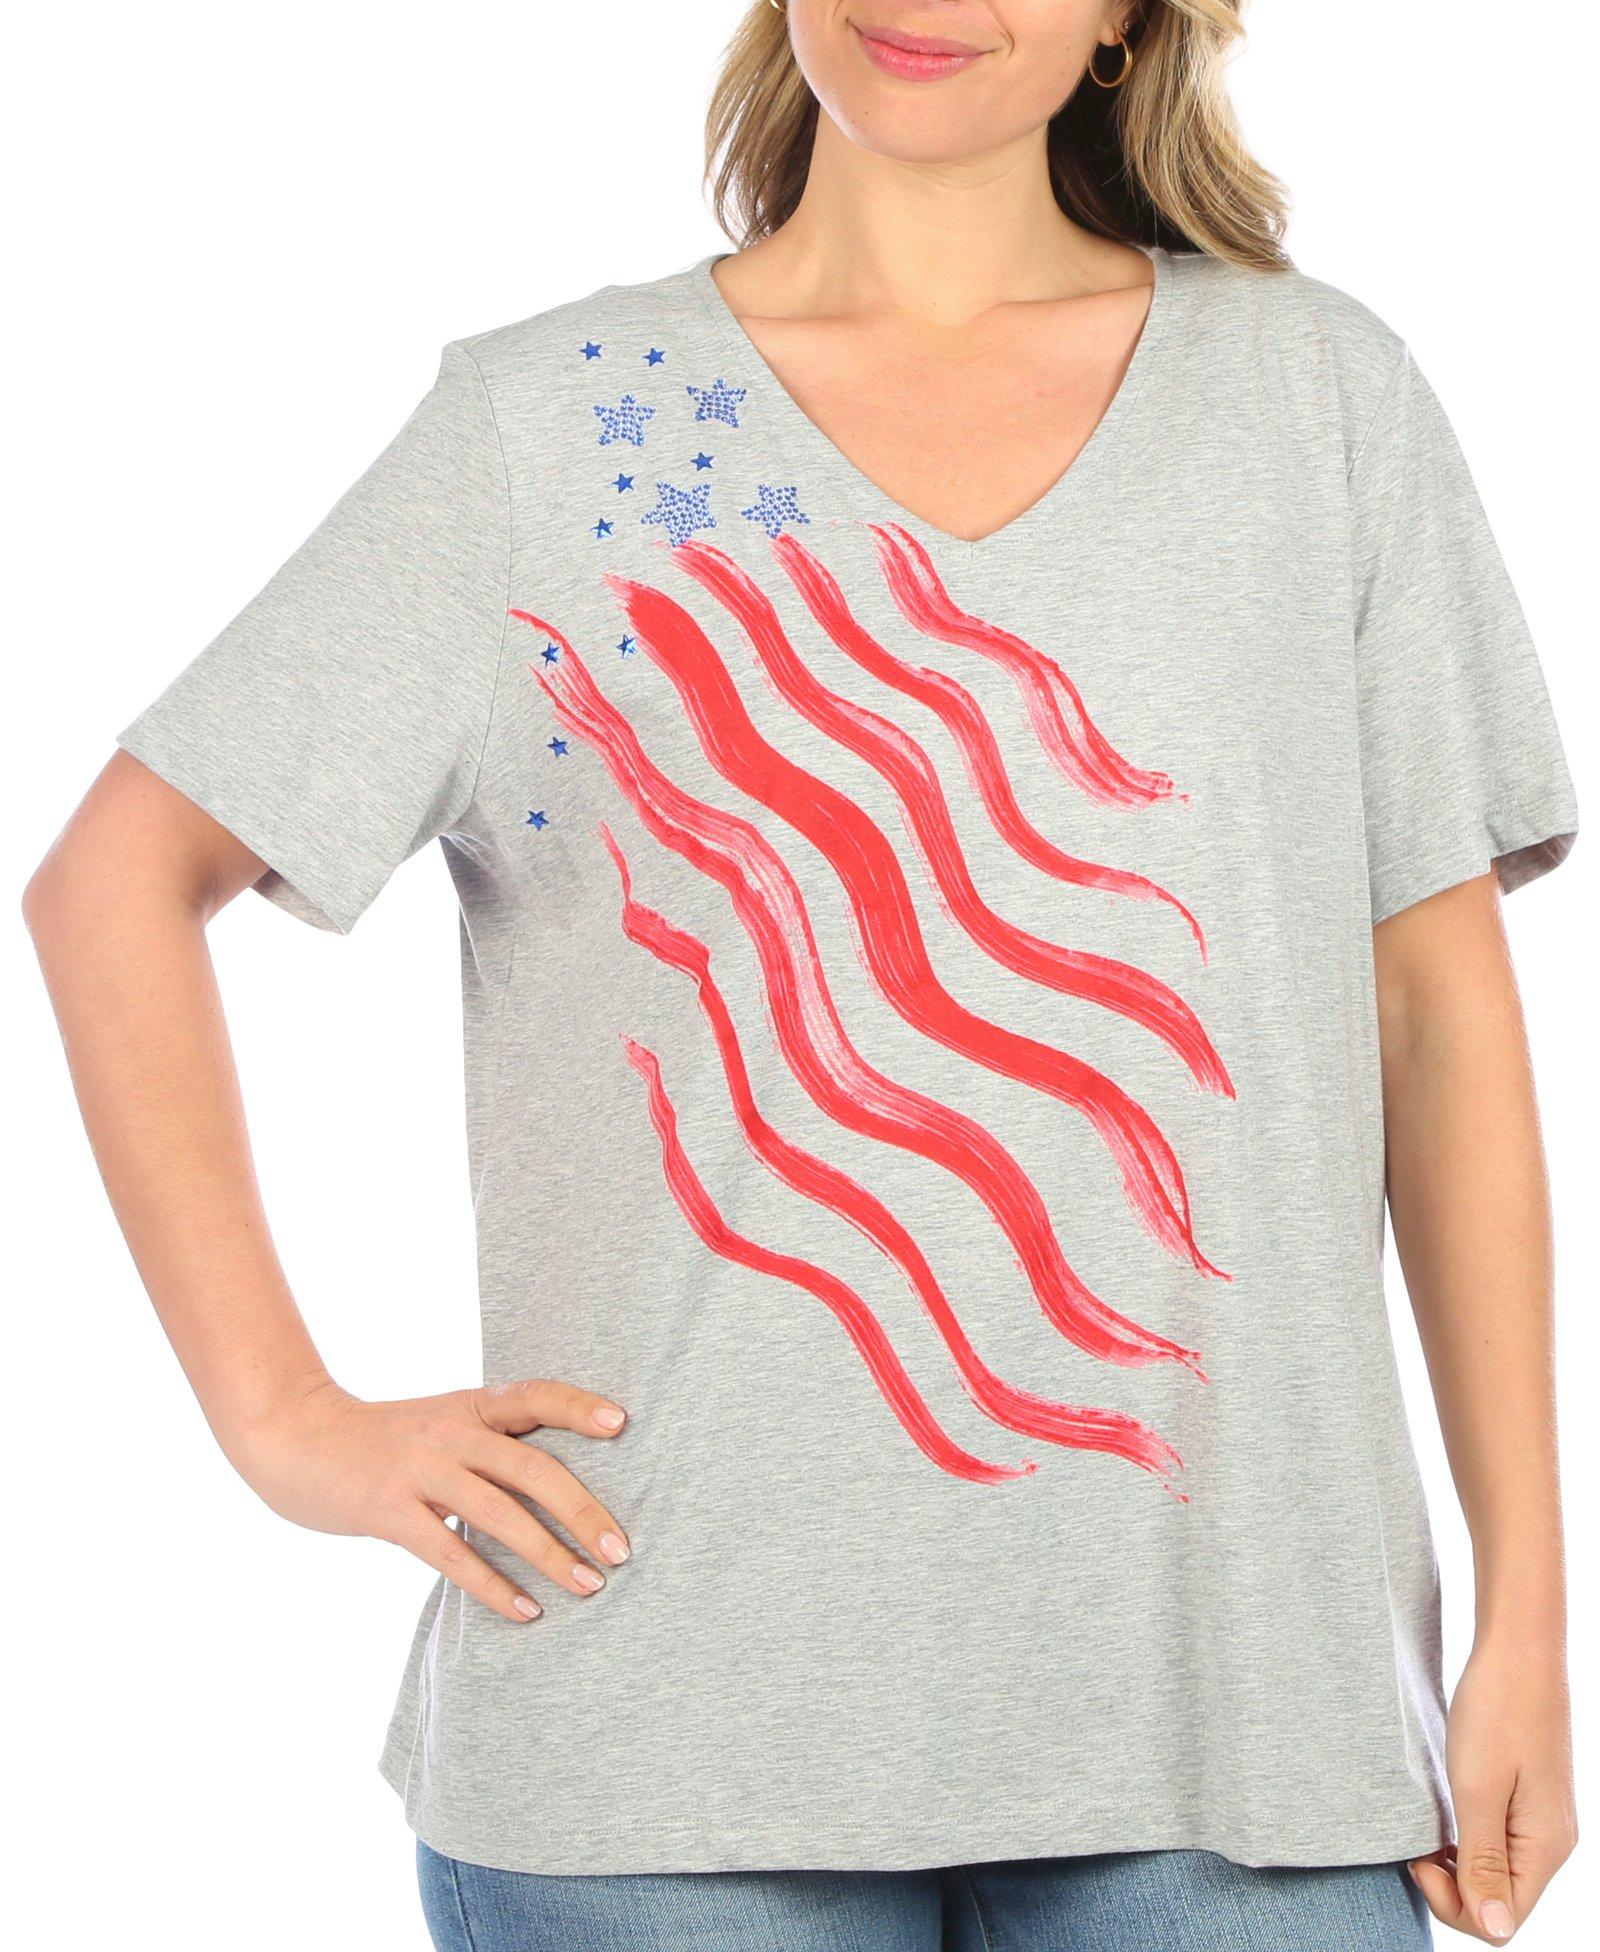 Coral Bay Womens Americana Flag Waves Short Sleeve Top